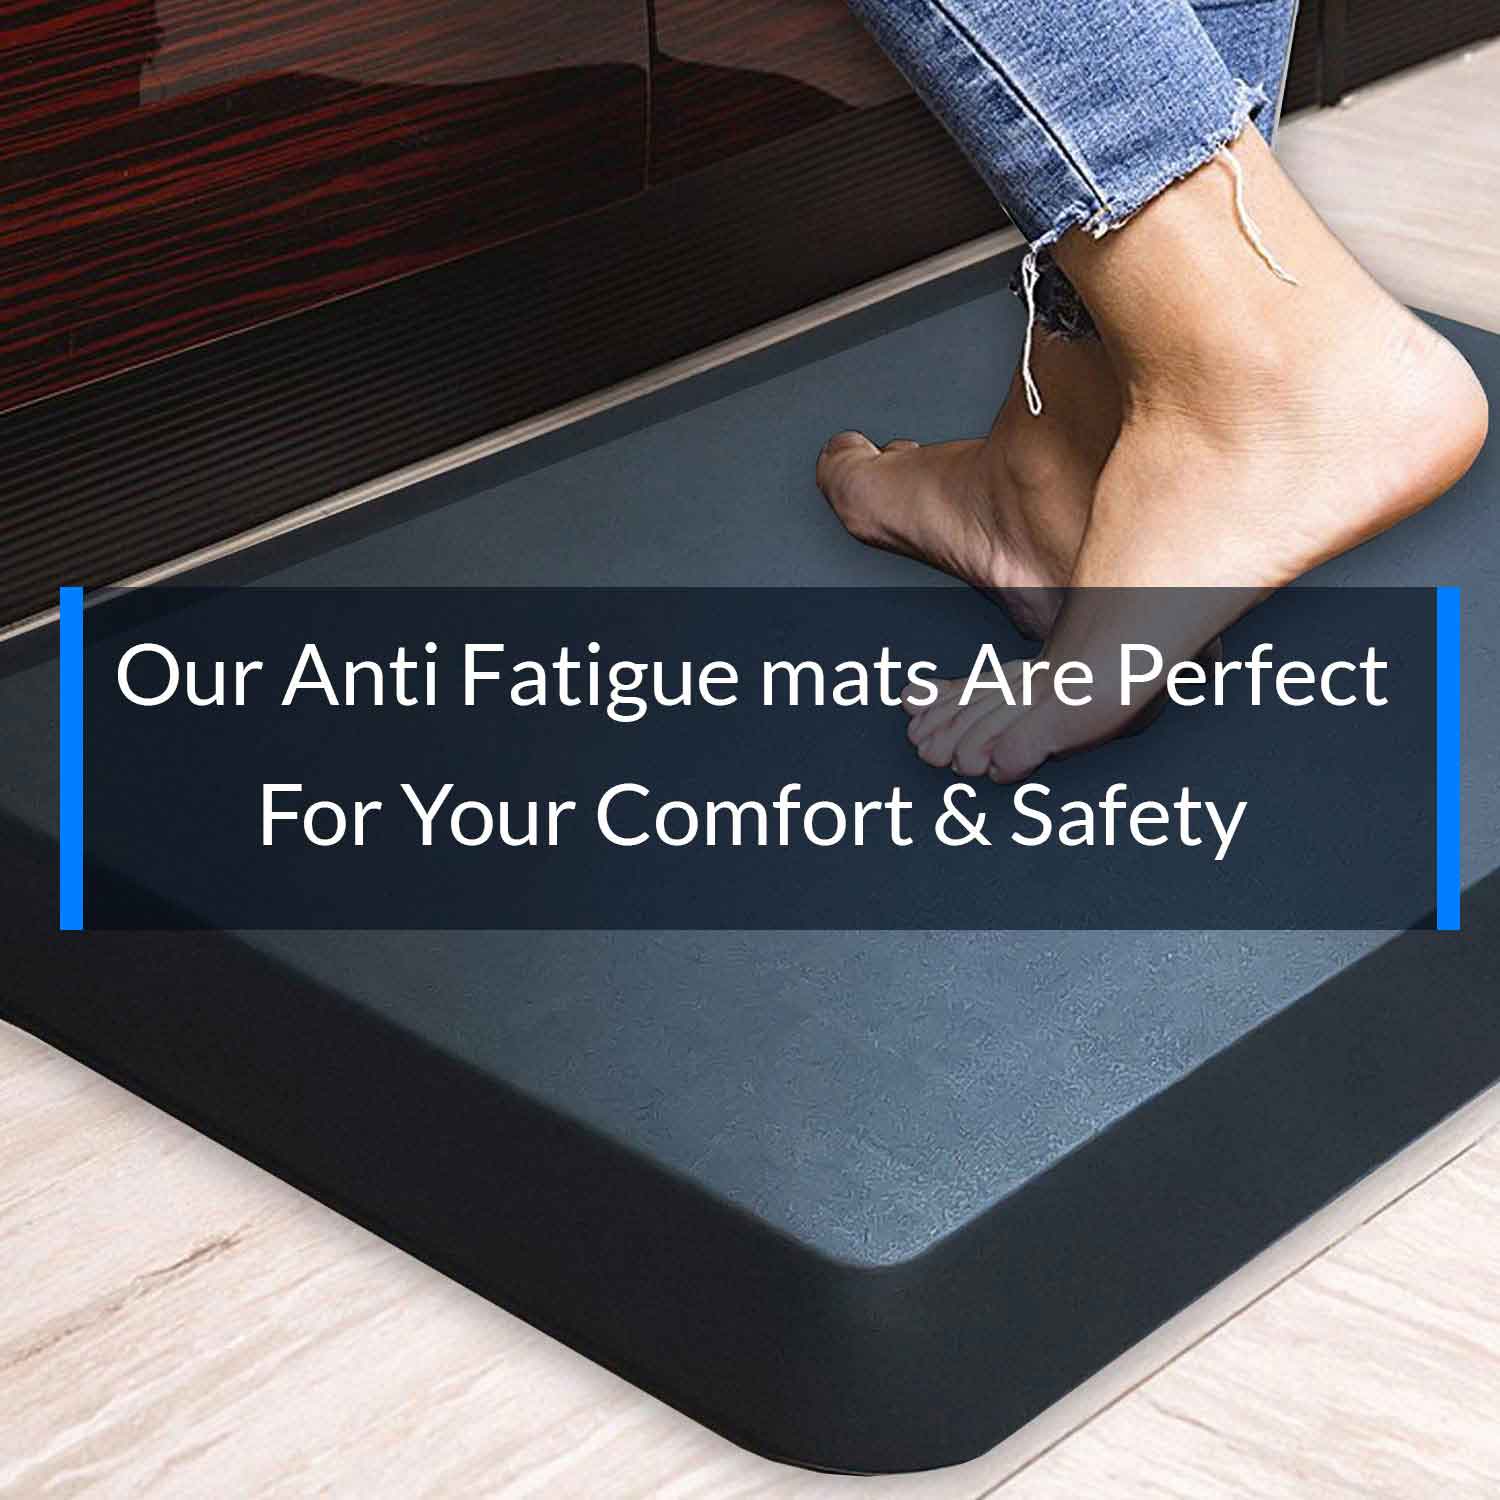 Anti Fatigue mats